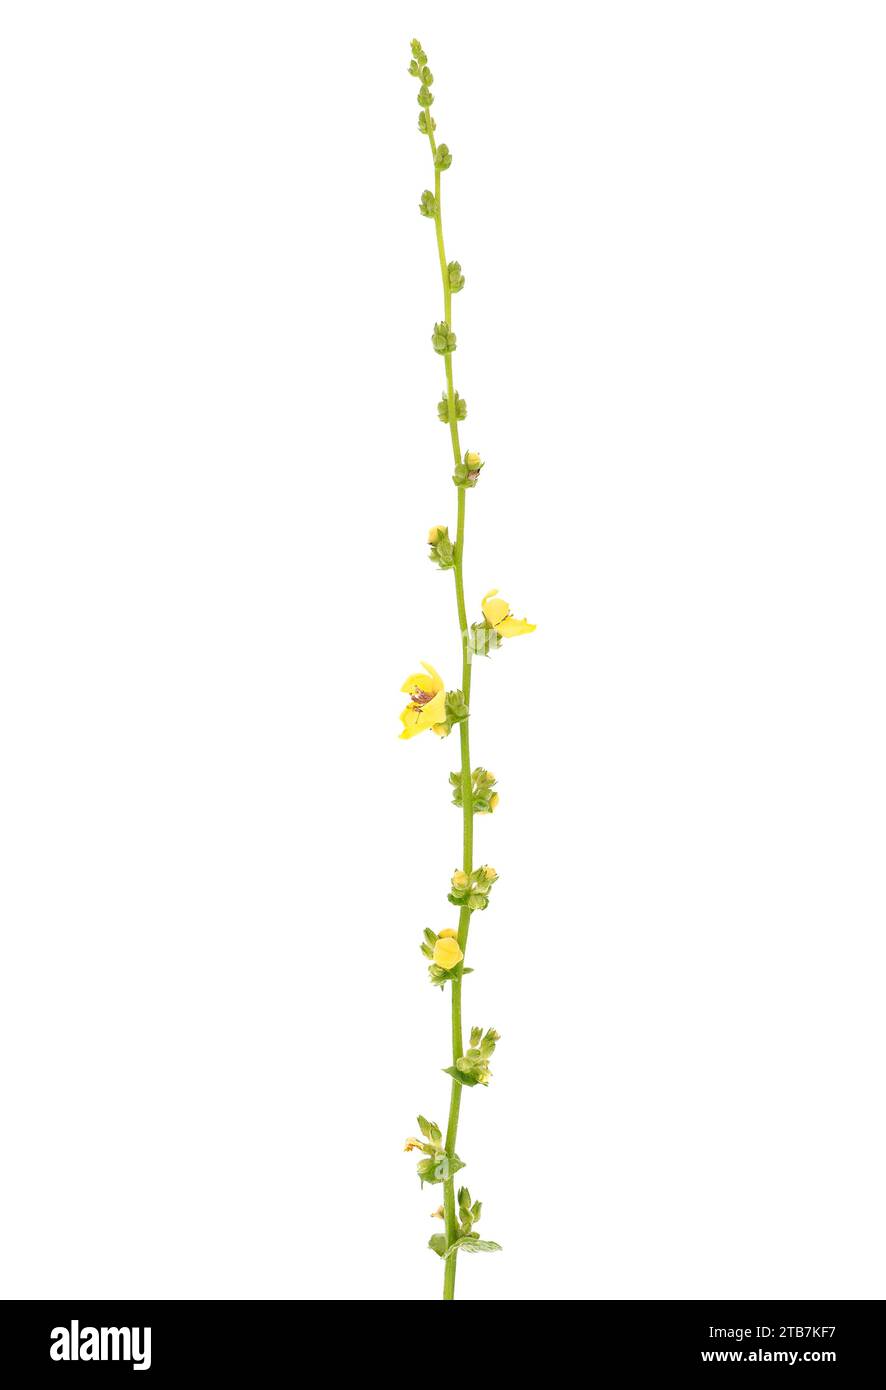 Wavyleaf mullein isolated on white background, Verbascum sinuatum Stock Photo